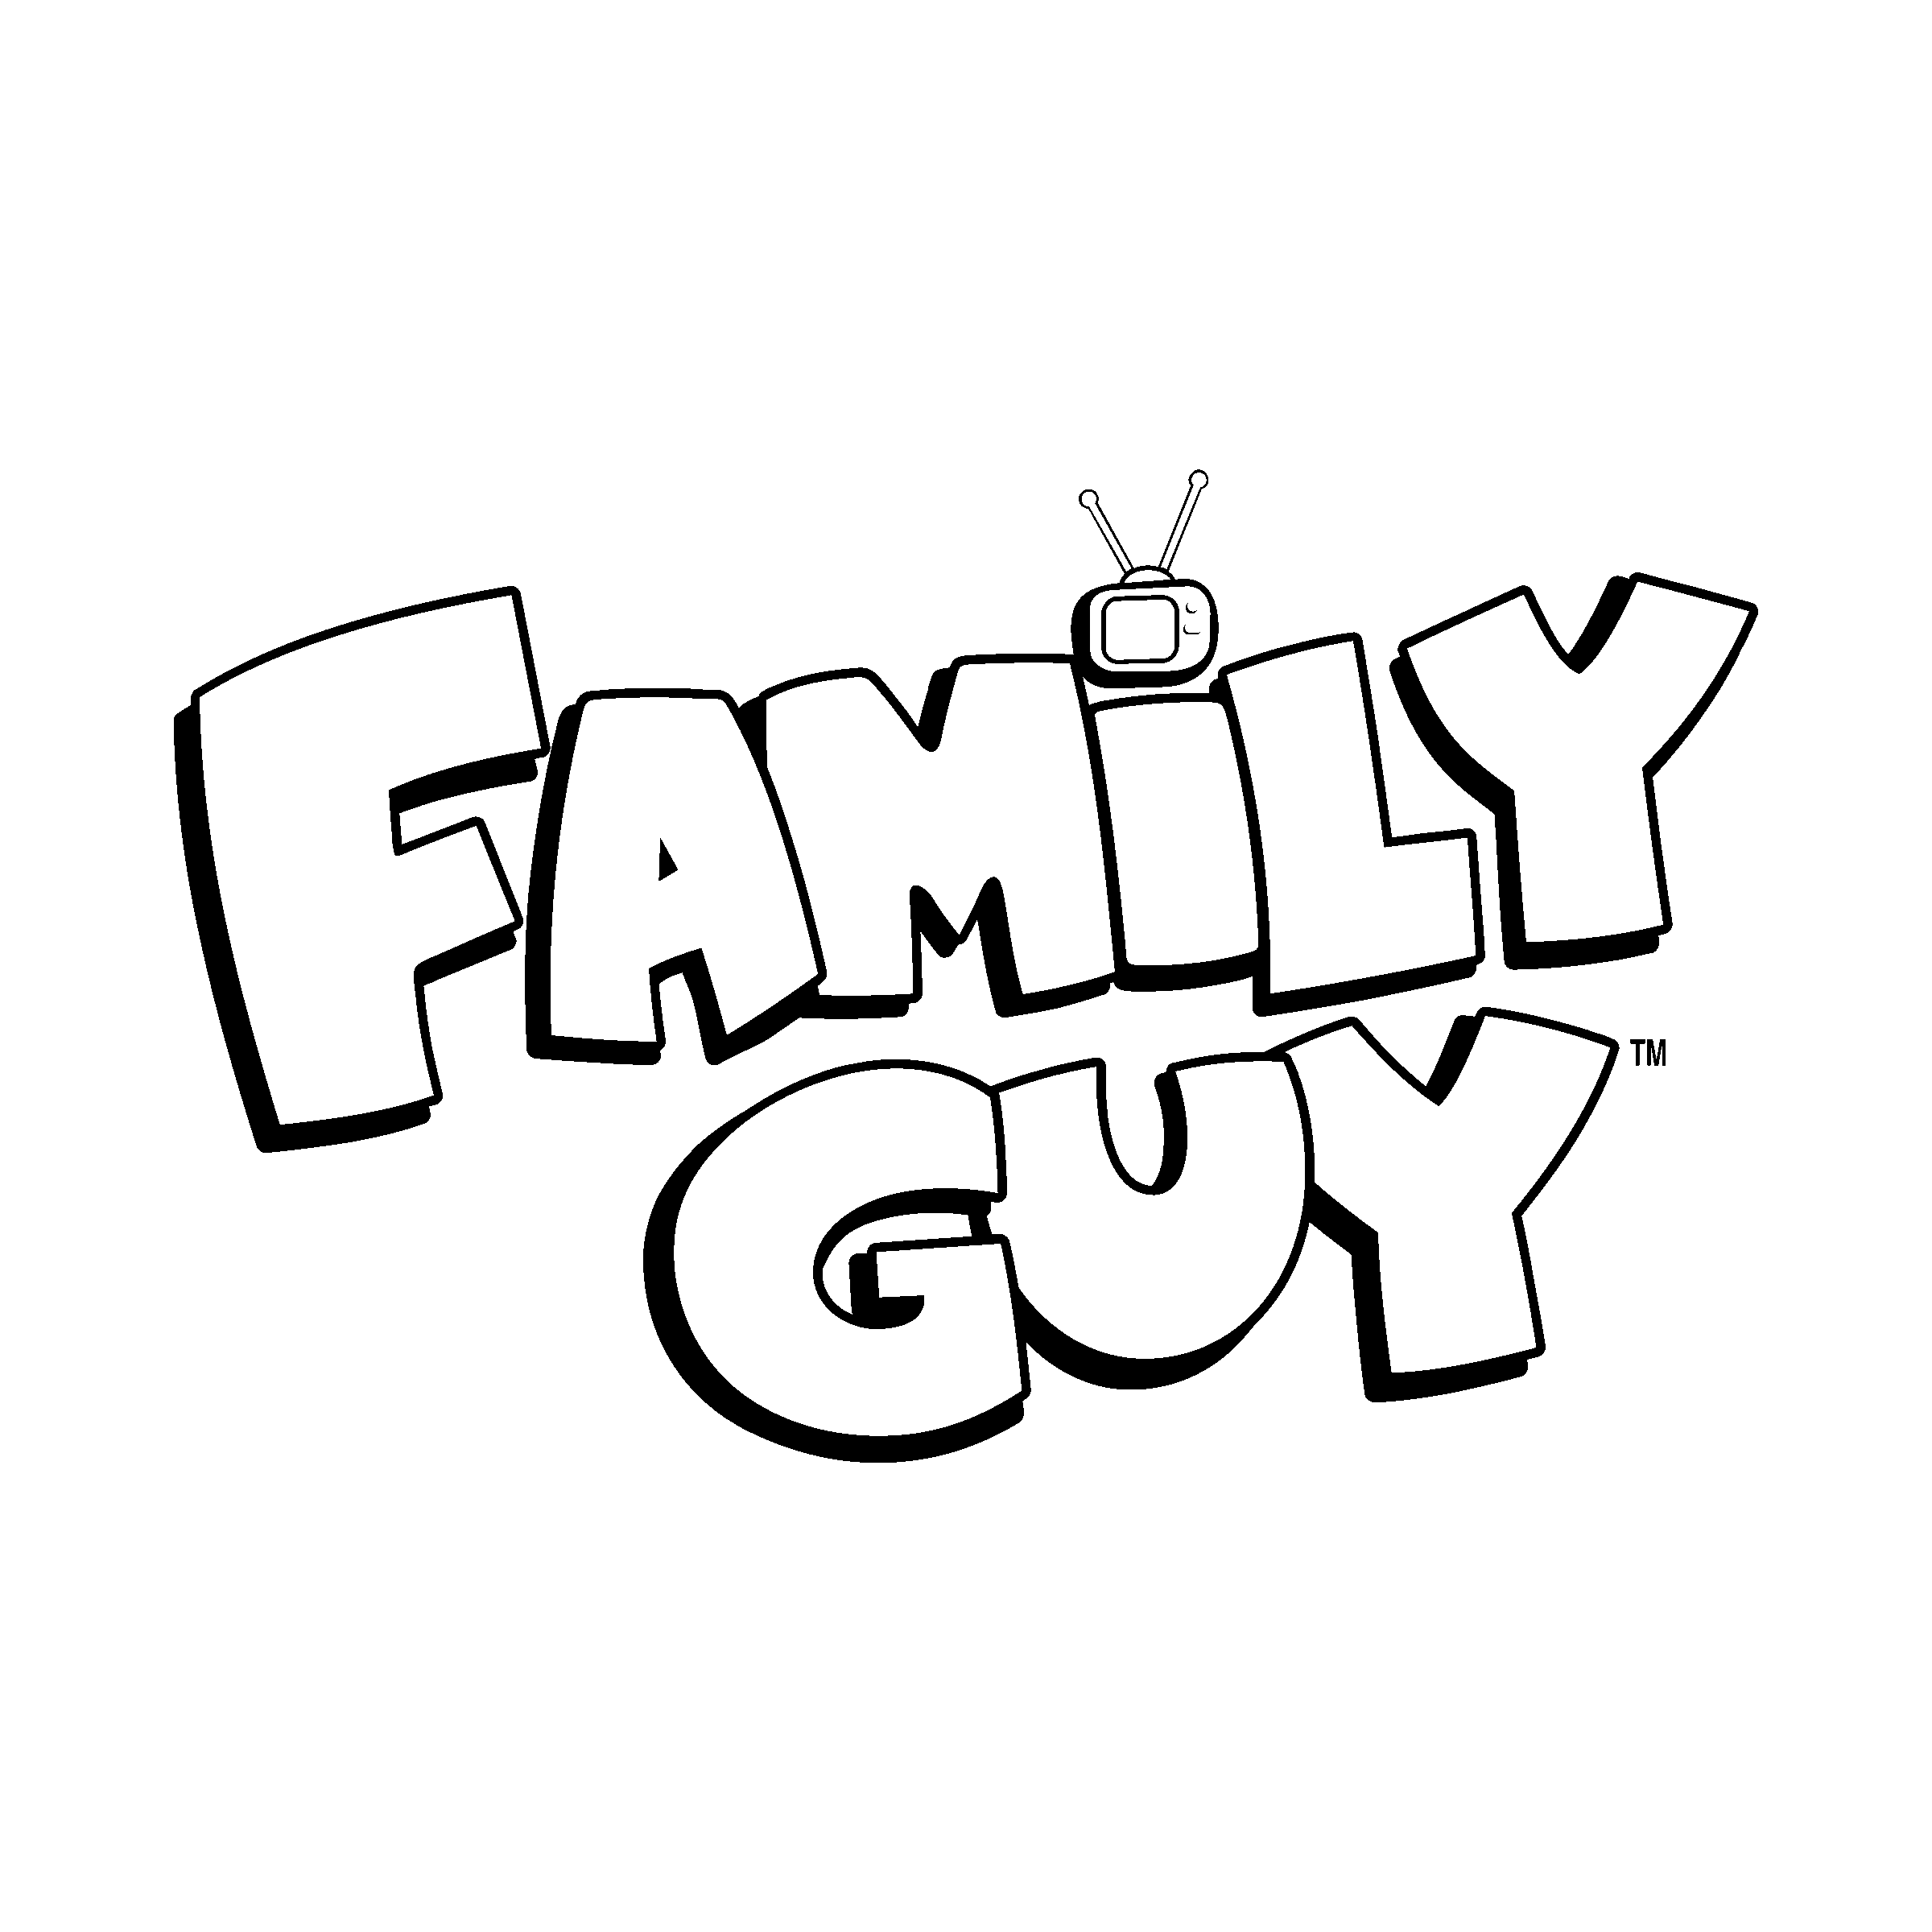 Guy Logo - Family Guy Logo PNG Transparent & SVG Vector - Freebie Supply